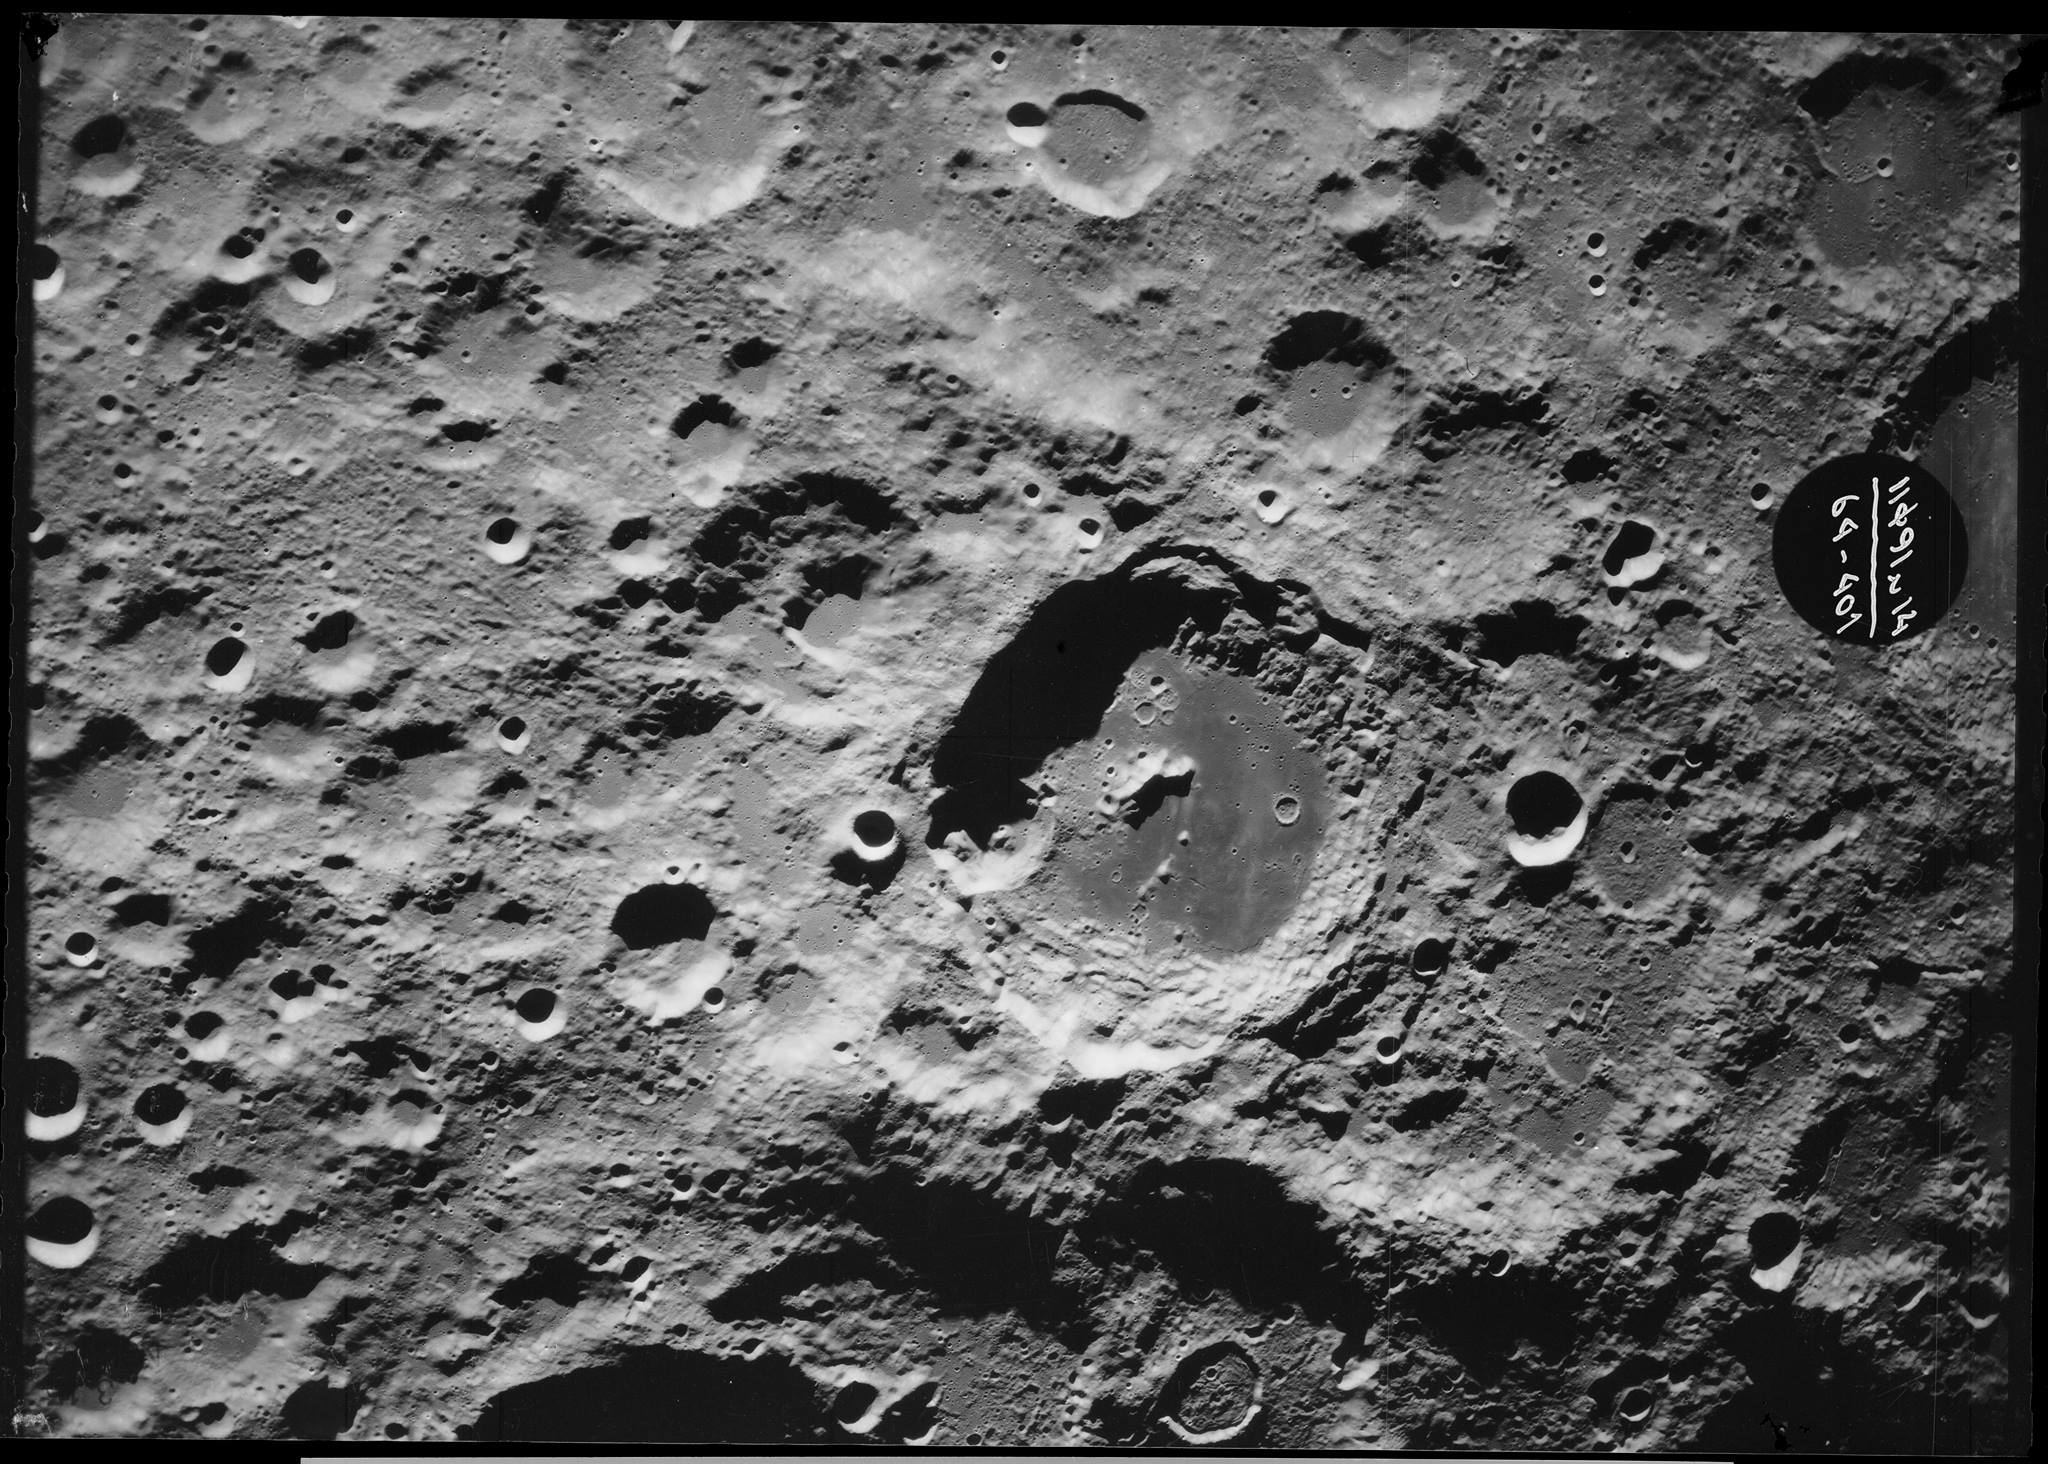 Обратная часть луны. Кратер Эйткен. Кратер Лунная поверхность Луны. Снимки обратной стороны Луны. Поверхность обратной стороны Луны.